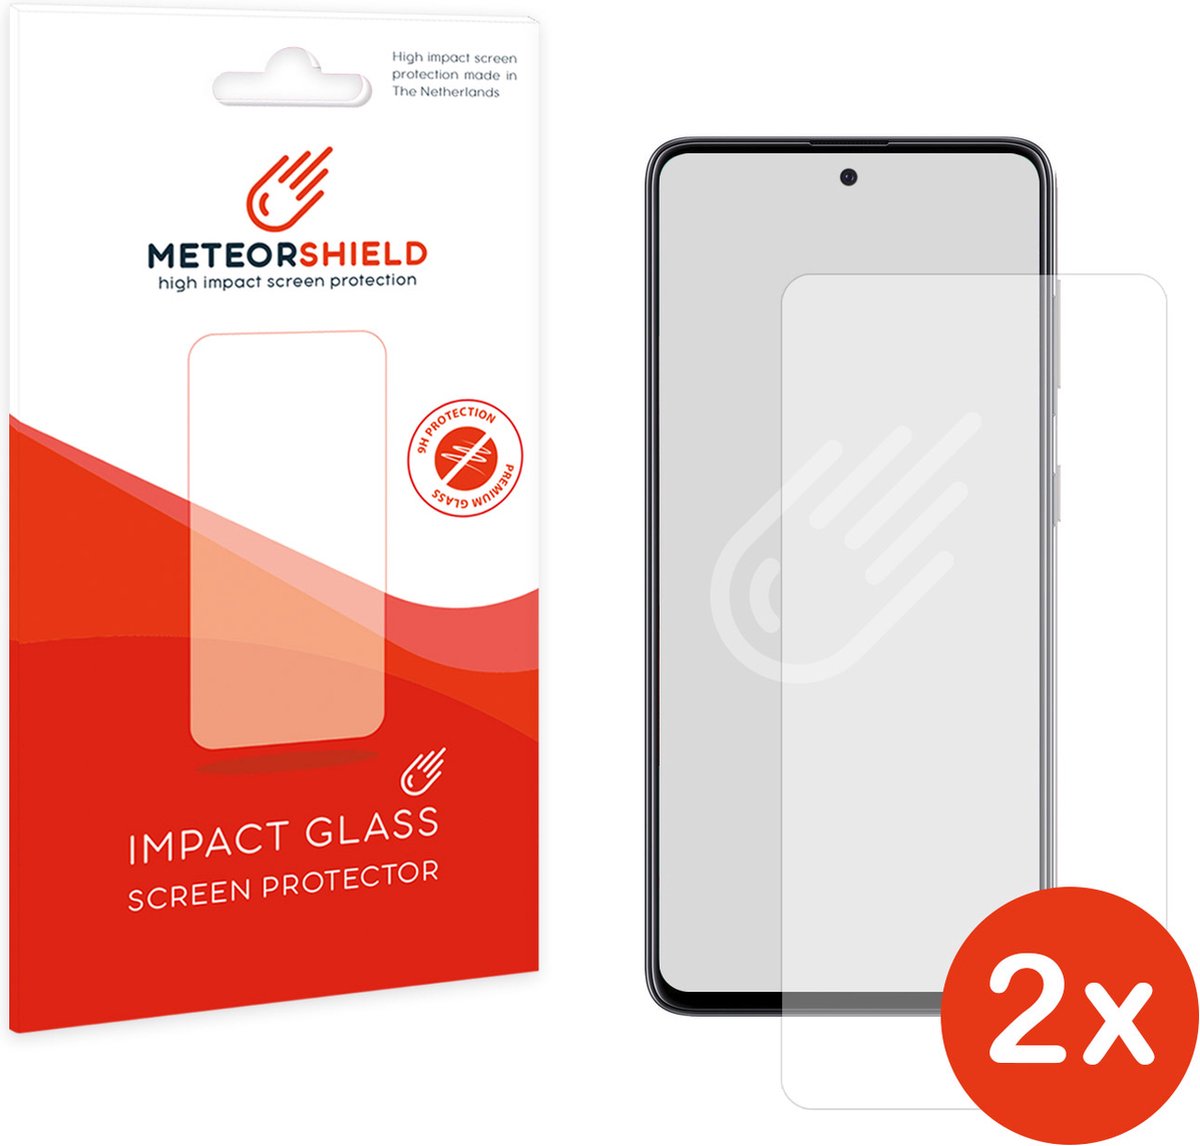 2 stuks: Meteorshield Samsung Galaxy A72 screenprotector - Ultra clear impact glass